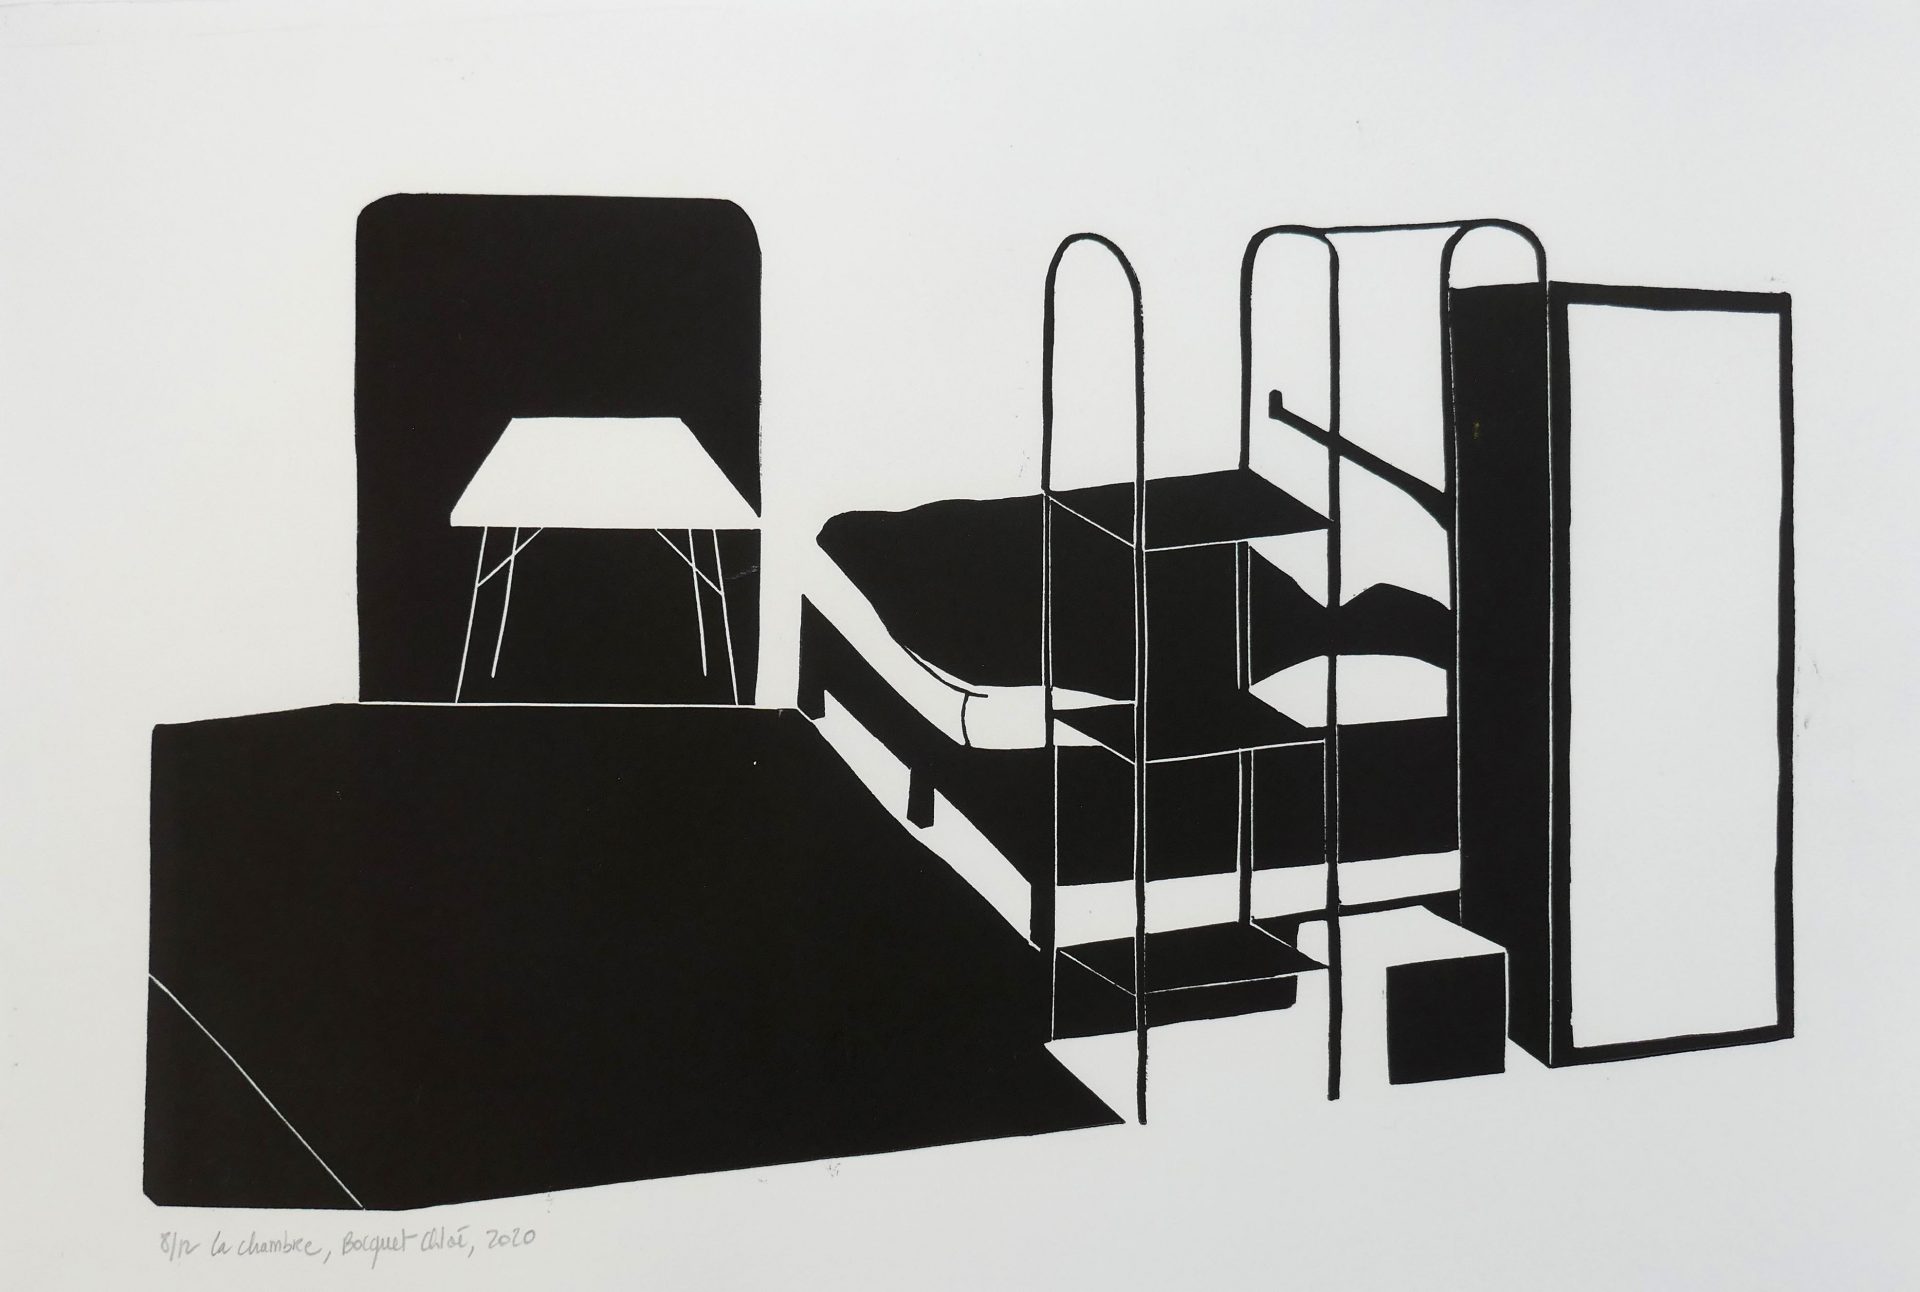 La chambre, 2020, linocut, image and paper size 34x51 cm, edition of 12